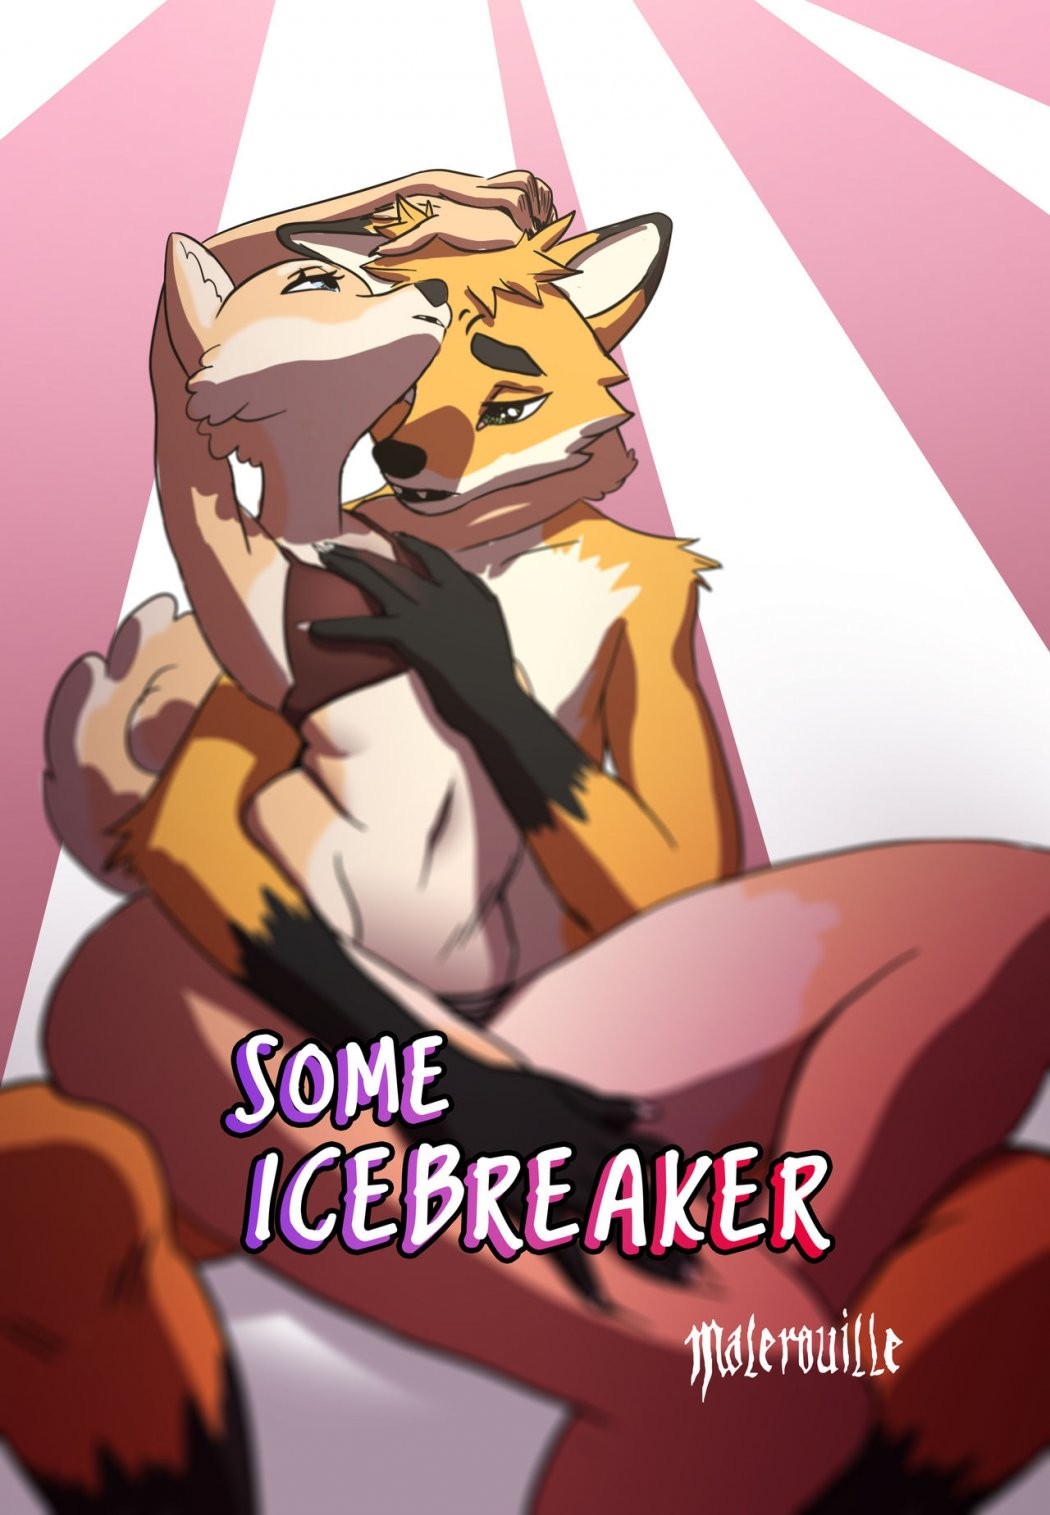 Some Icebreaker